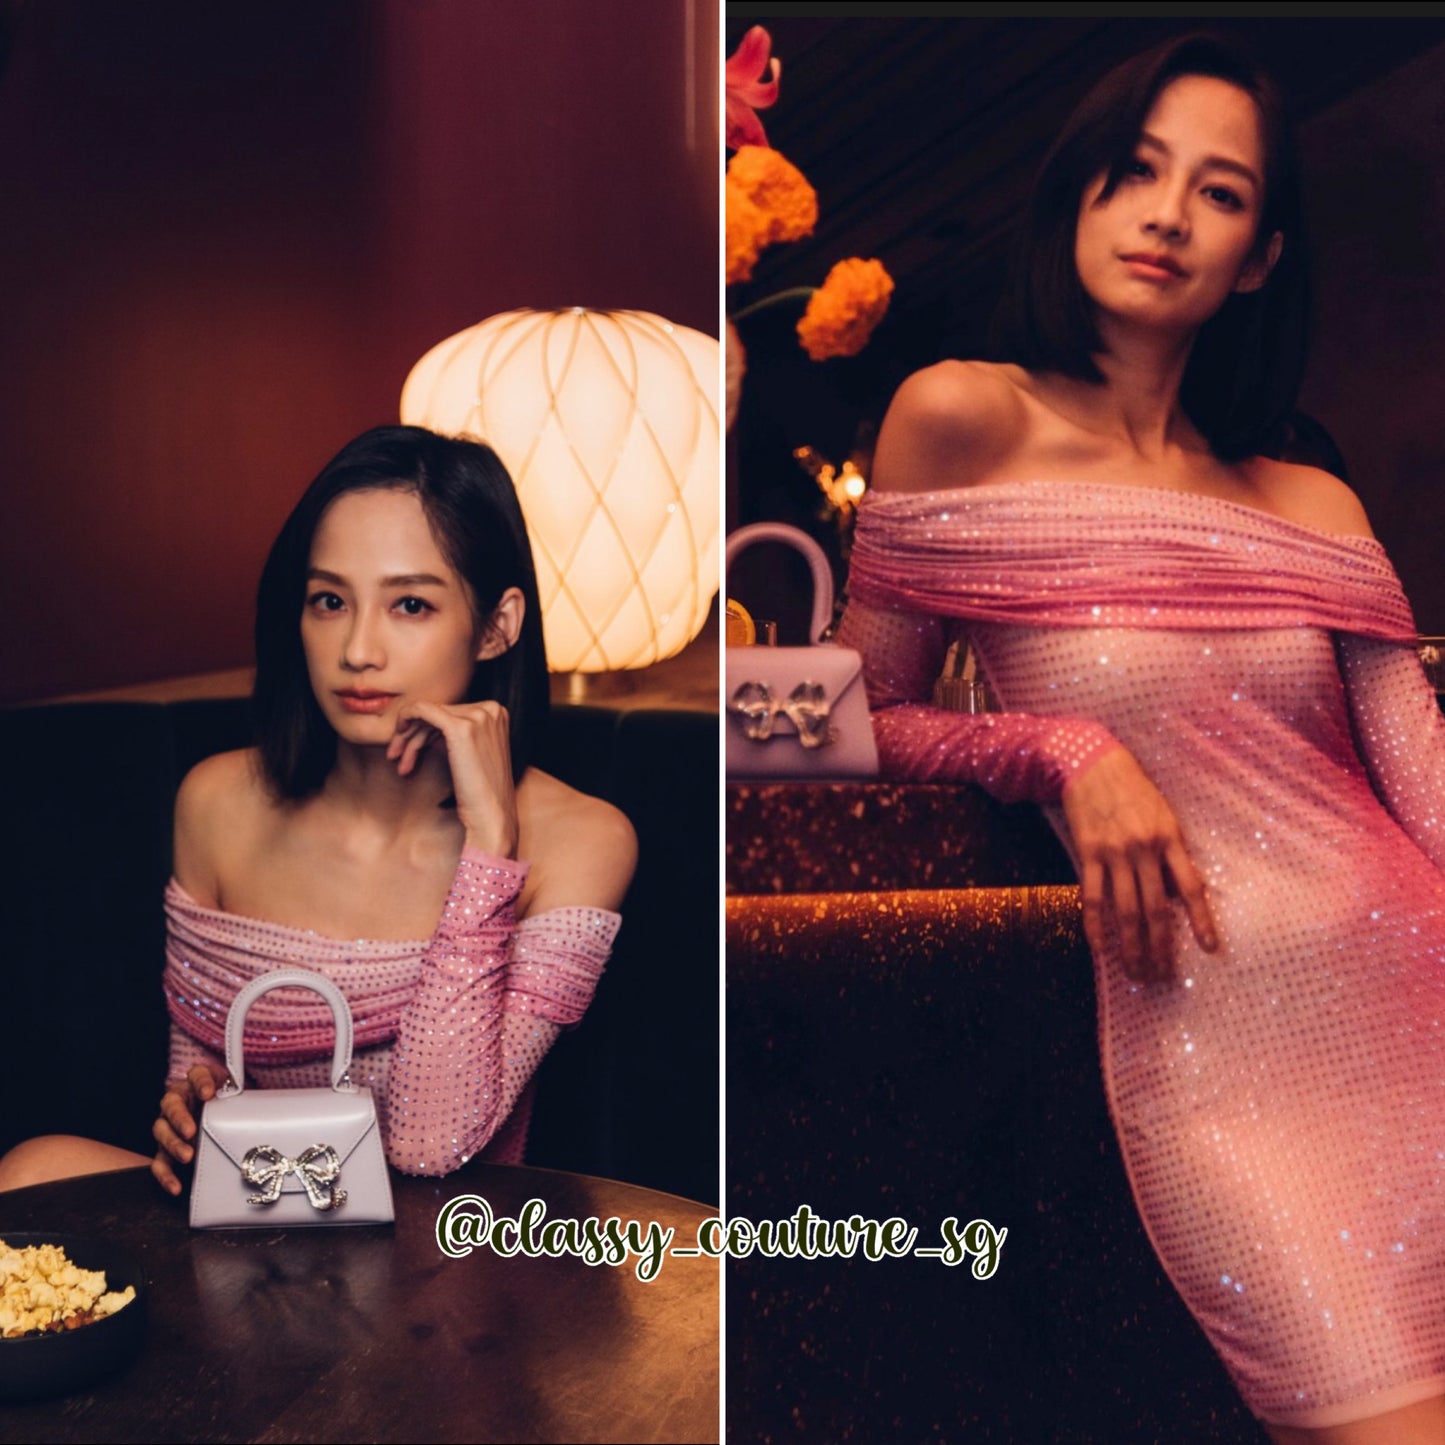 SP Pink Contour Print Mini | Maxi Dress | off shoulder rhinestone